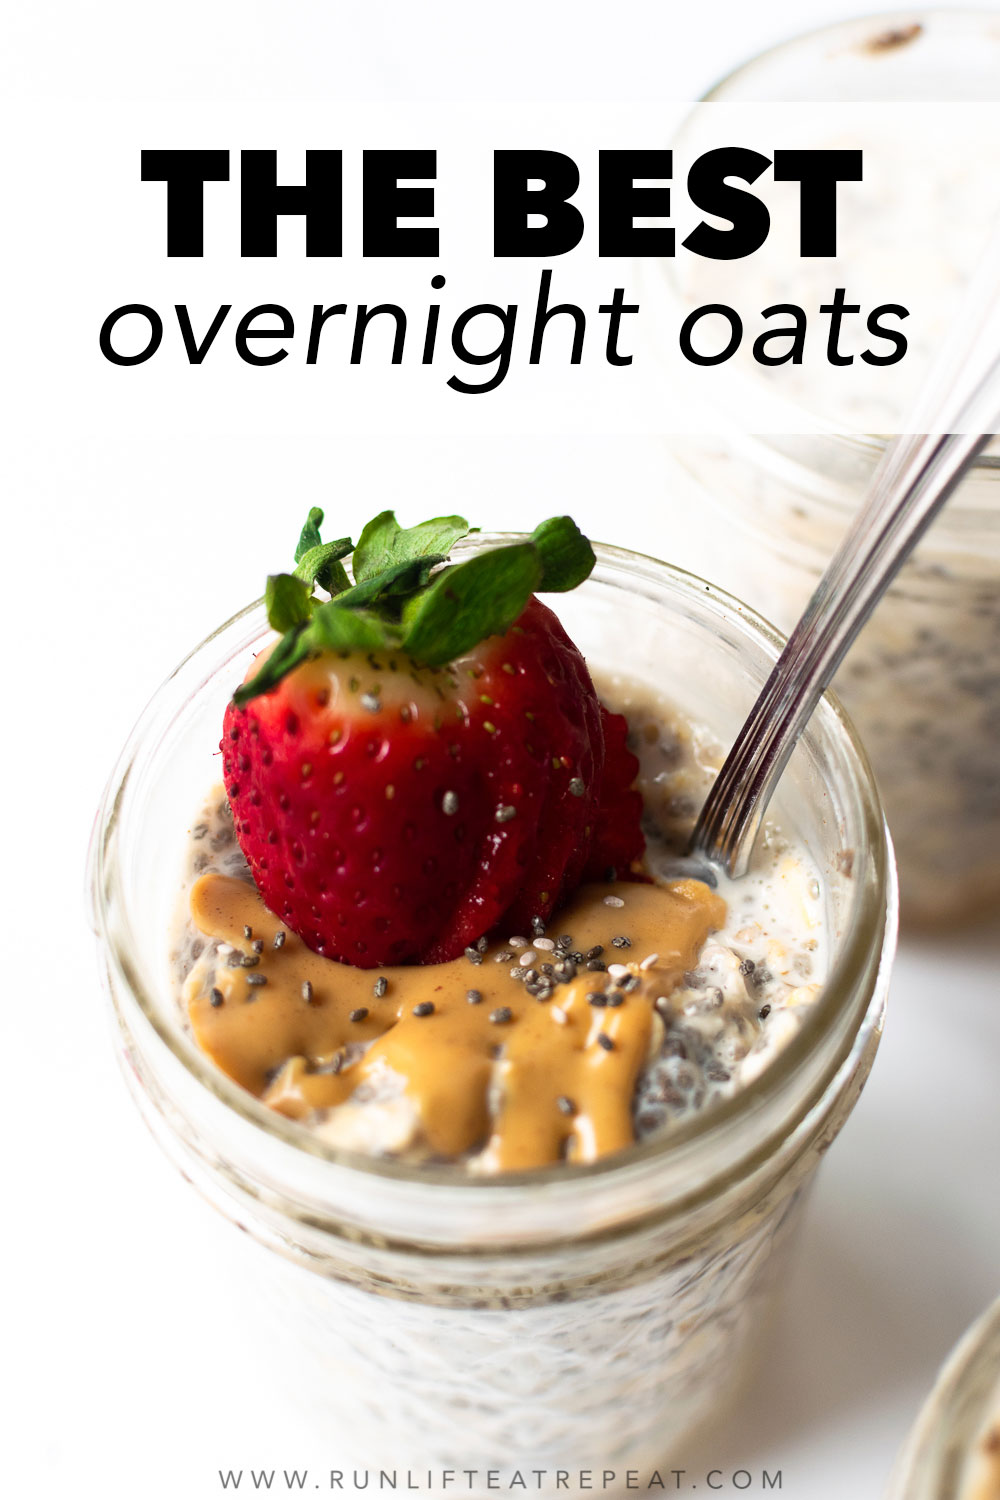 The Best Overnight Oats